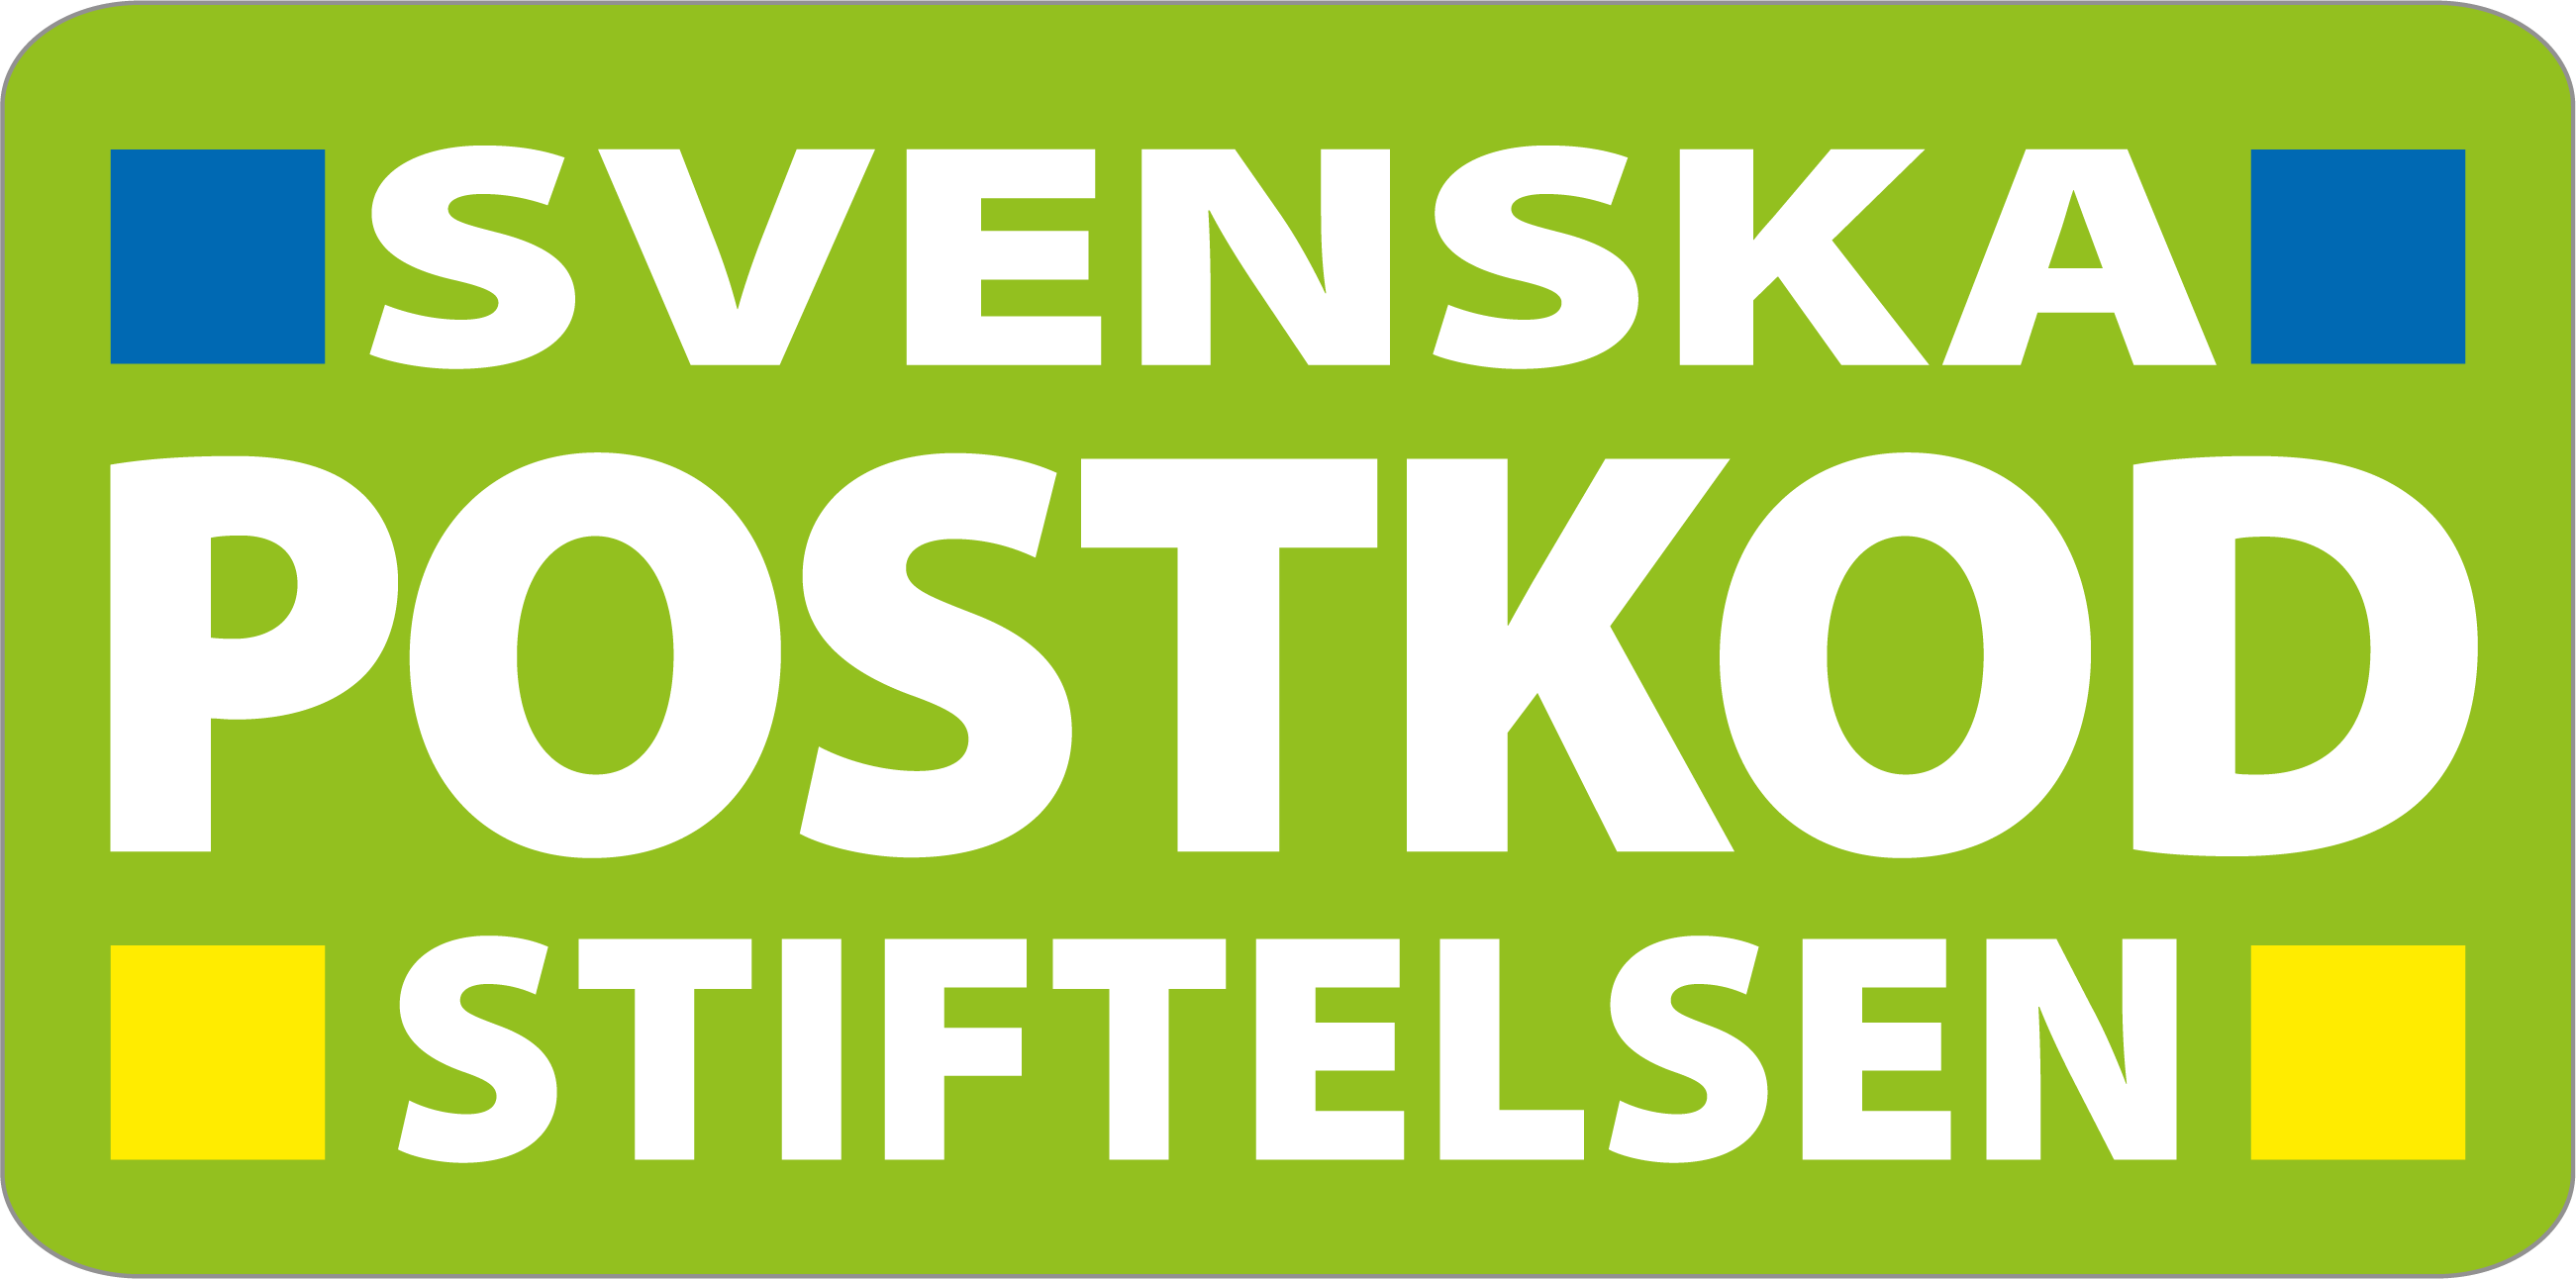 Svenska Postkodstiftelsen